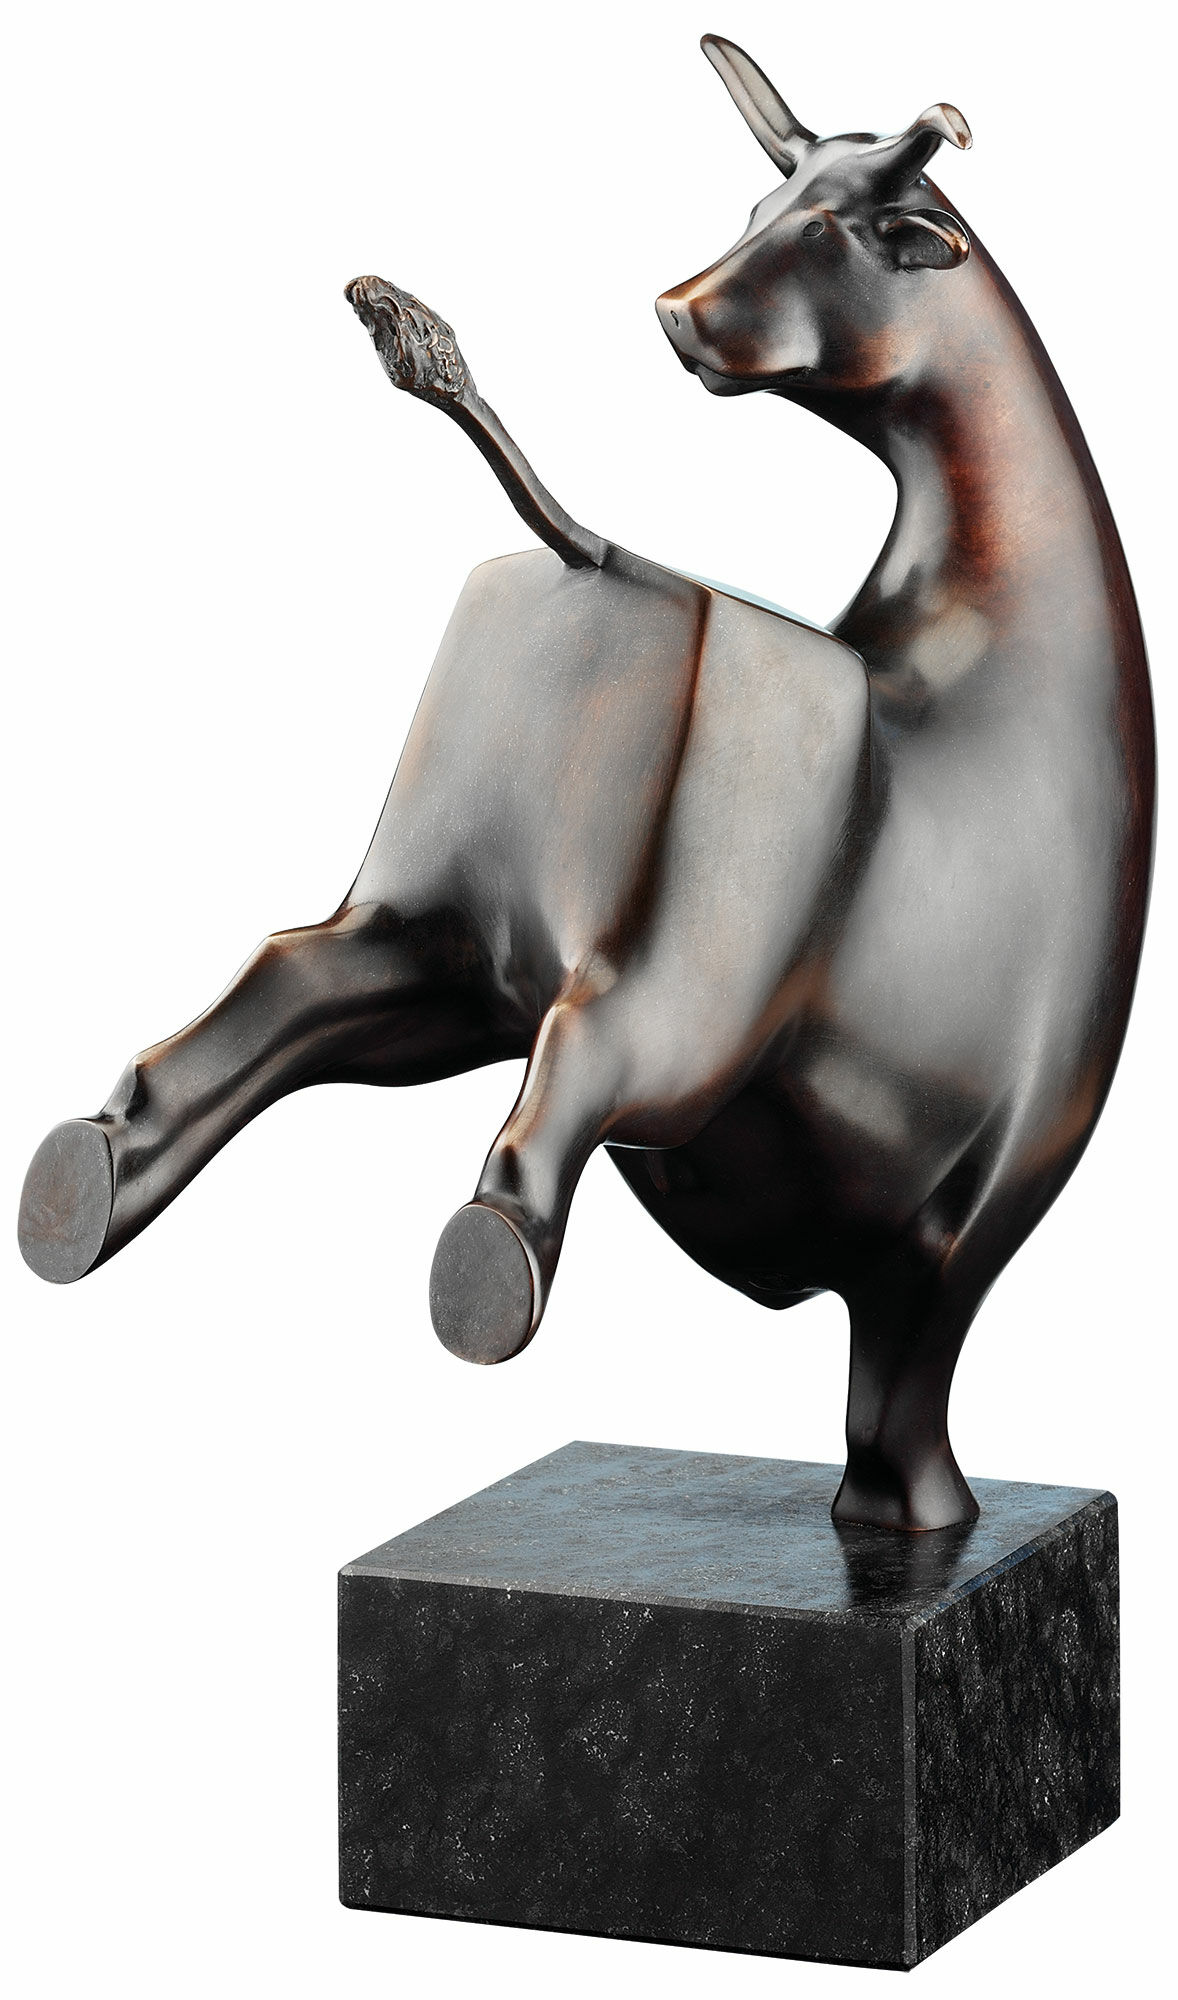 Sculptuur "De Dansende Stier", brons von Evert den Hartog